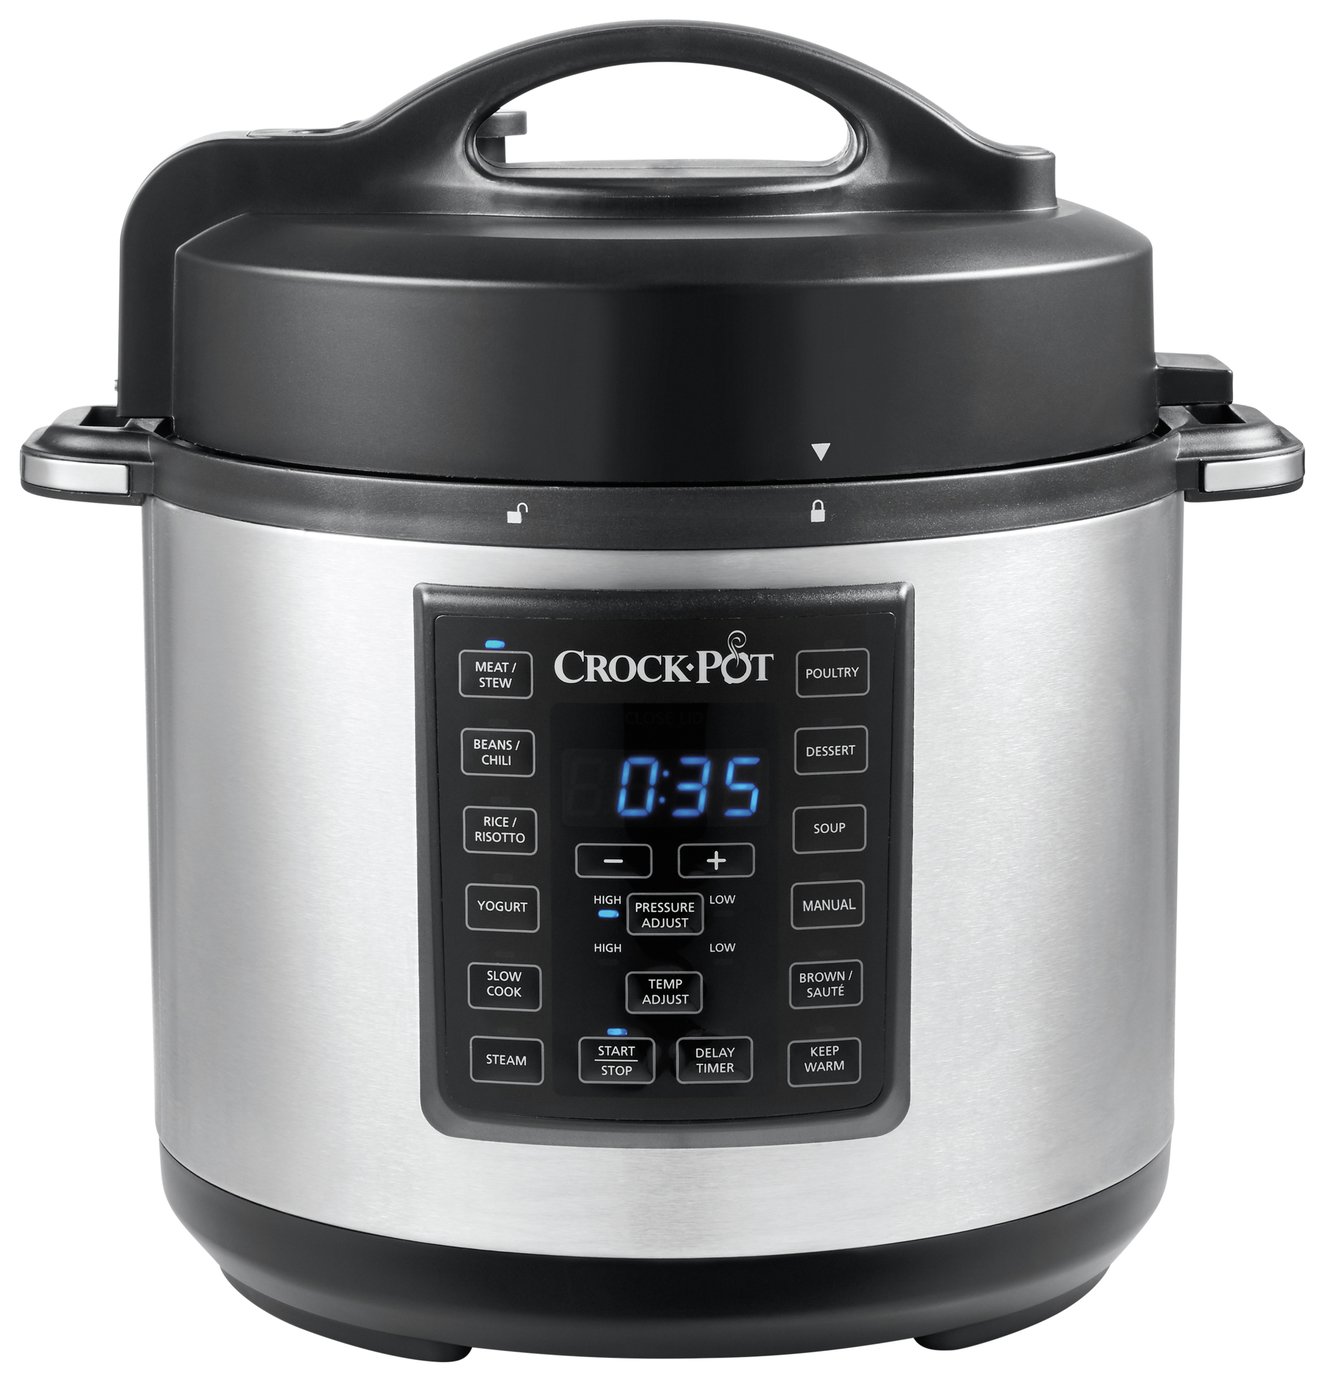 Crockpot 5.6L Pressure Cooker review